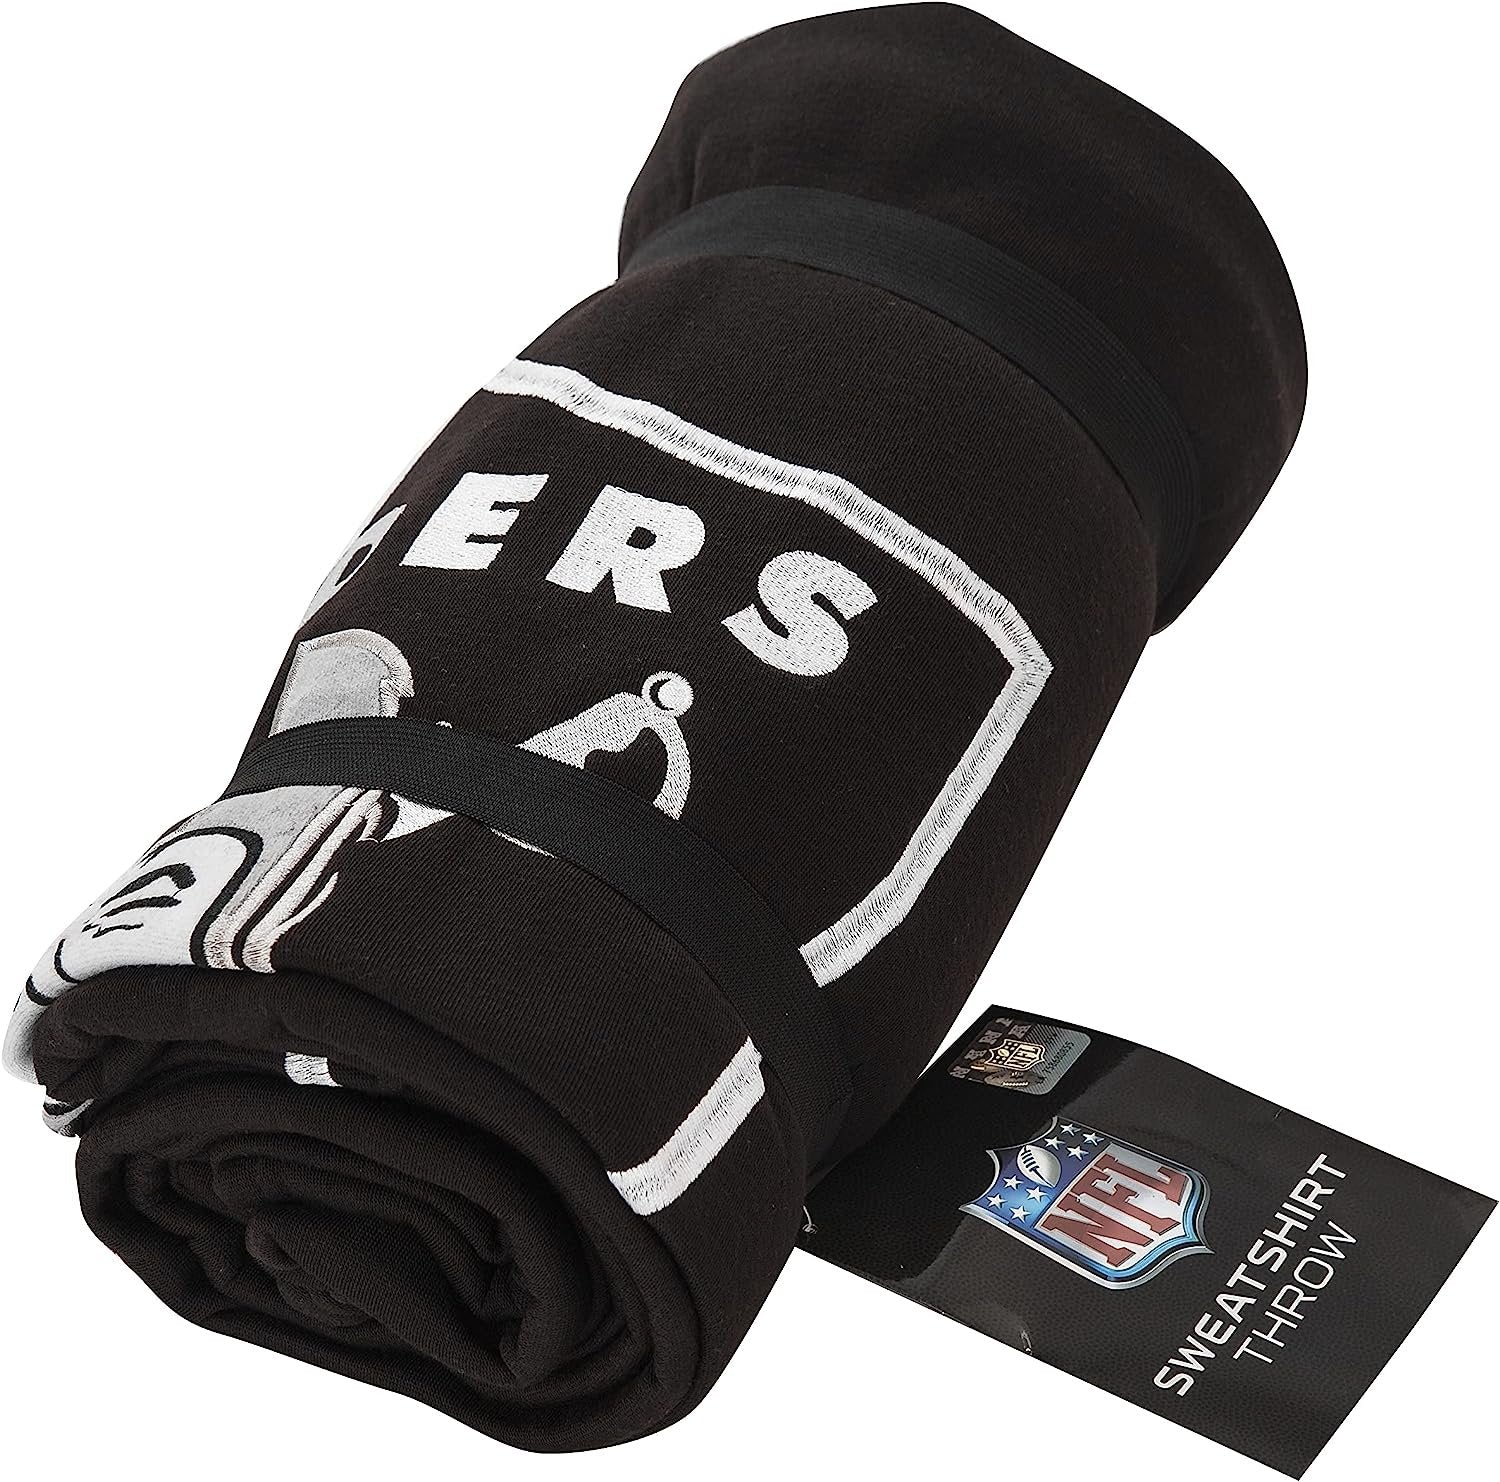 Las Vegas Raiders Throw Blanket, Sweatshirt Design, Embroidered Logo, Dominate Style, 54x84 Inch